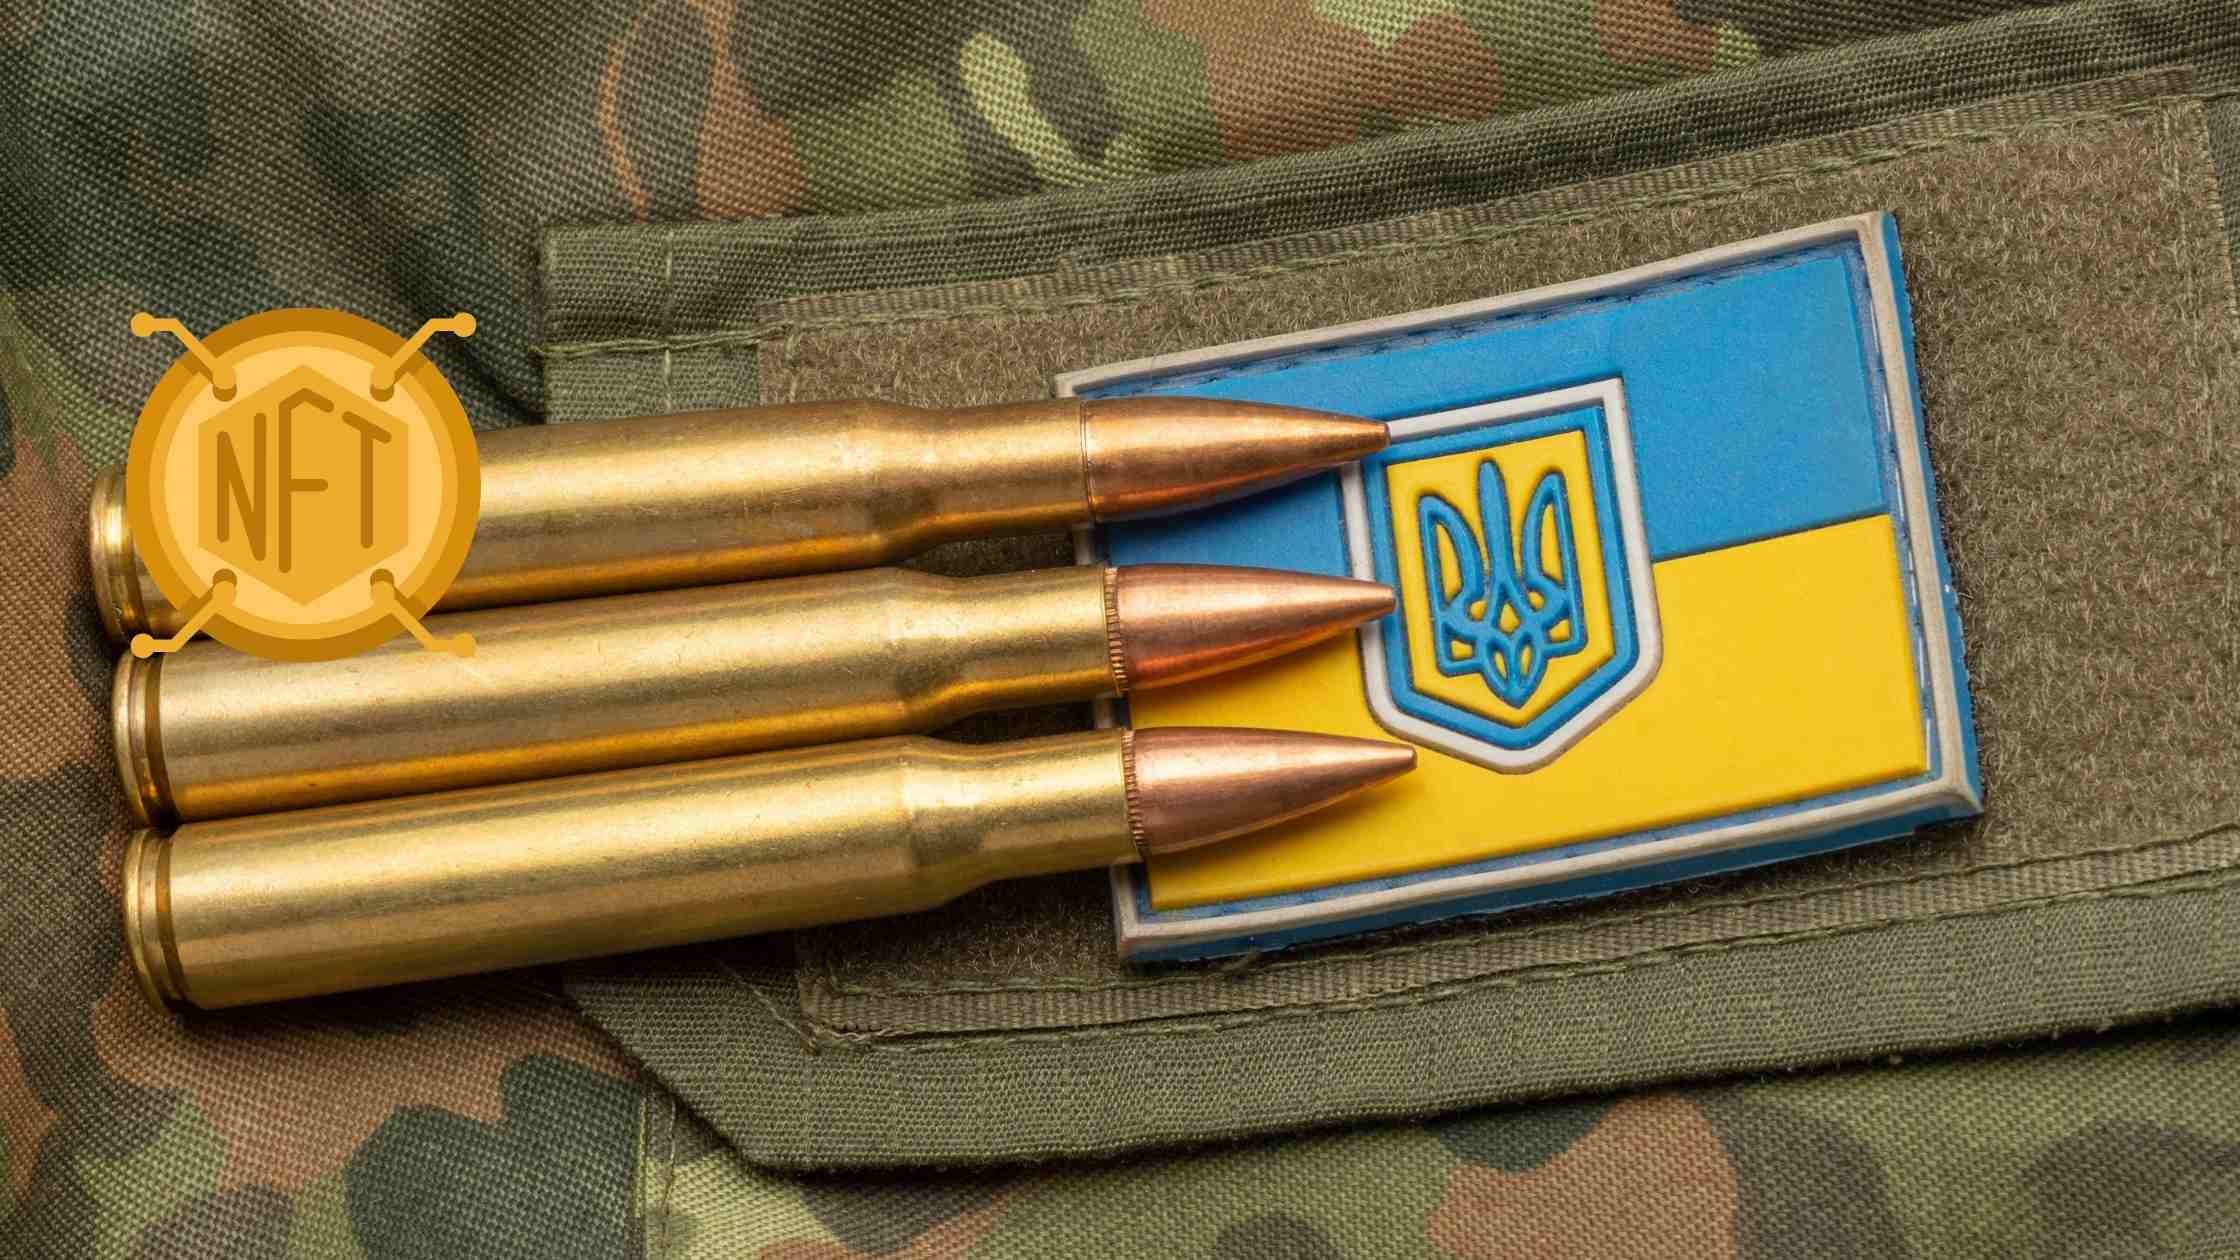 Ukraine Sells War Snapshots as NFTs